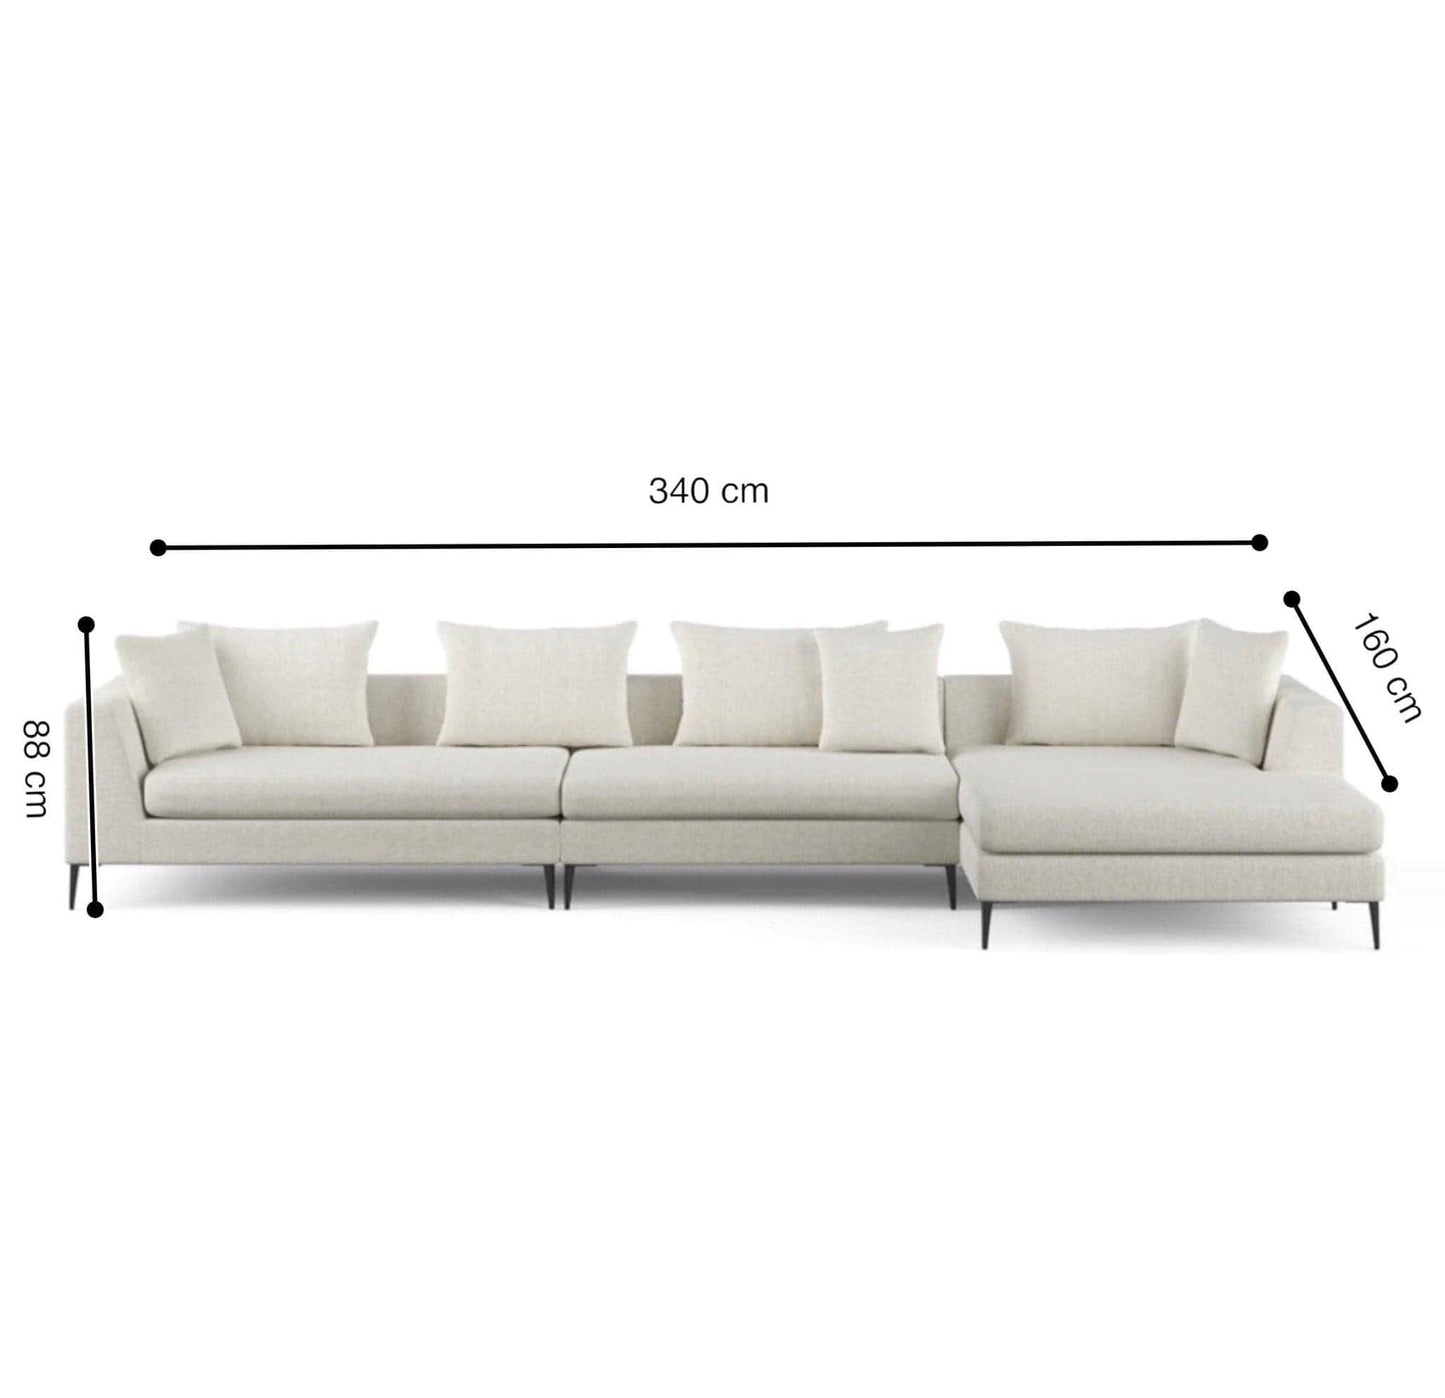 Home Atelier Cotton Linen Fabric / 4 seater L-shape/ Length 340cm / Cream Arellano Sectional Sofa